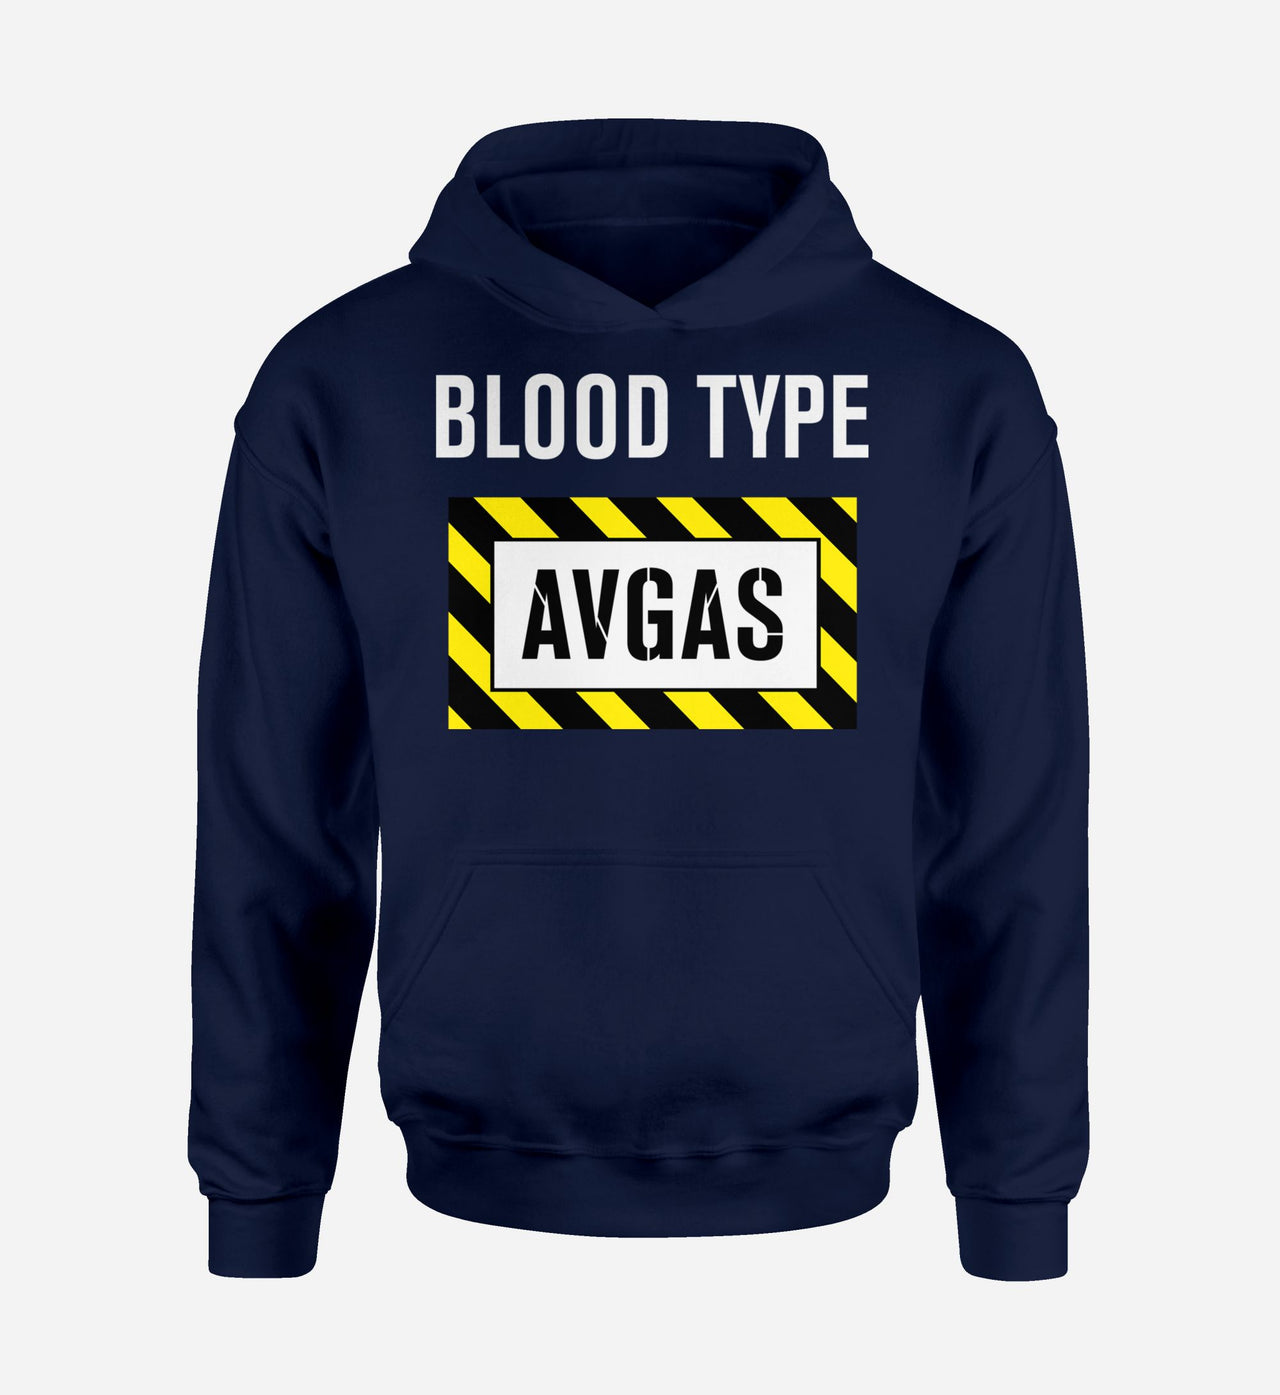 Blood Type AVGAS Designed Hoodies